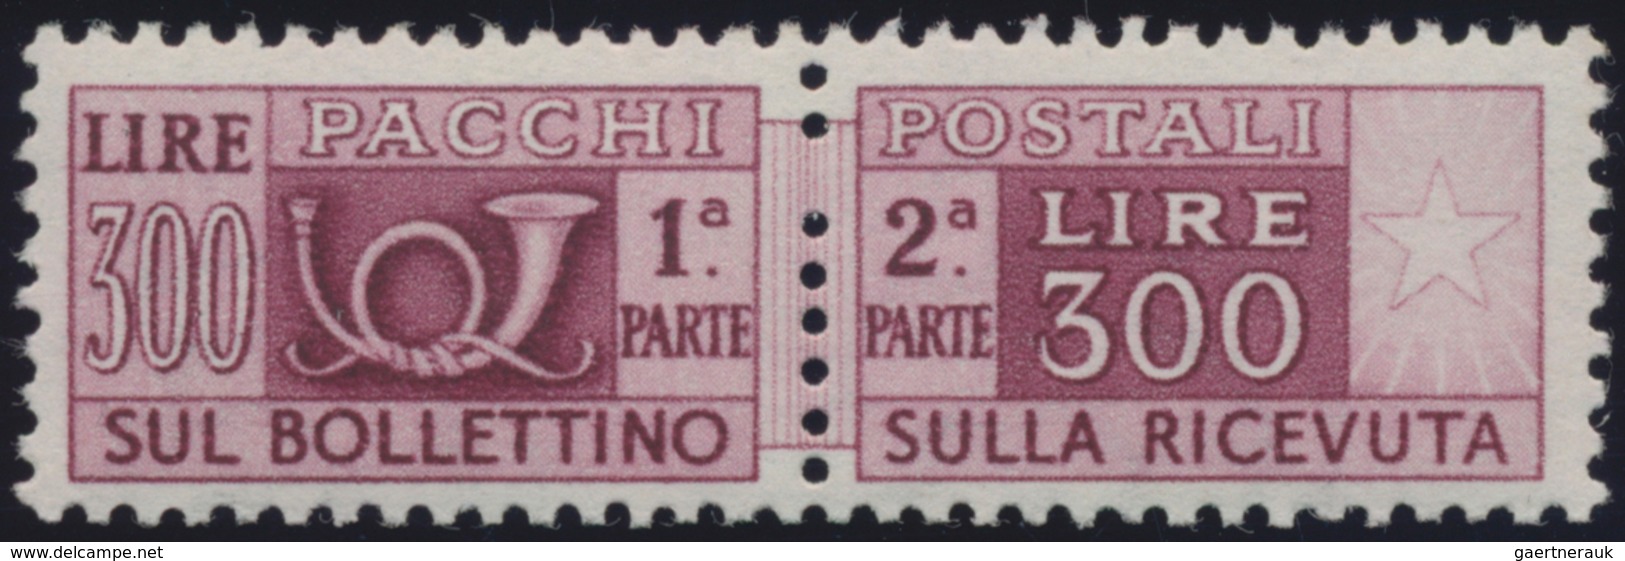 Italien - Paketmarken: 1946/1952, Posthorn/Cypher, Wm Winged Wheel, 5lire-300lire, MNH Set Of Ten Pa - Paquetes Postales